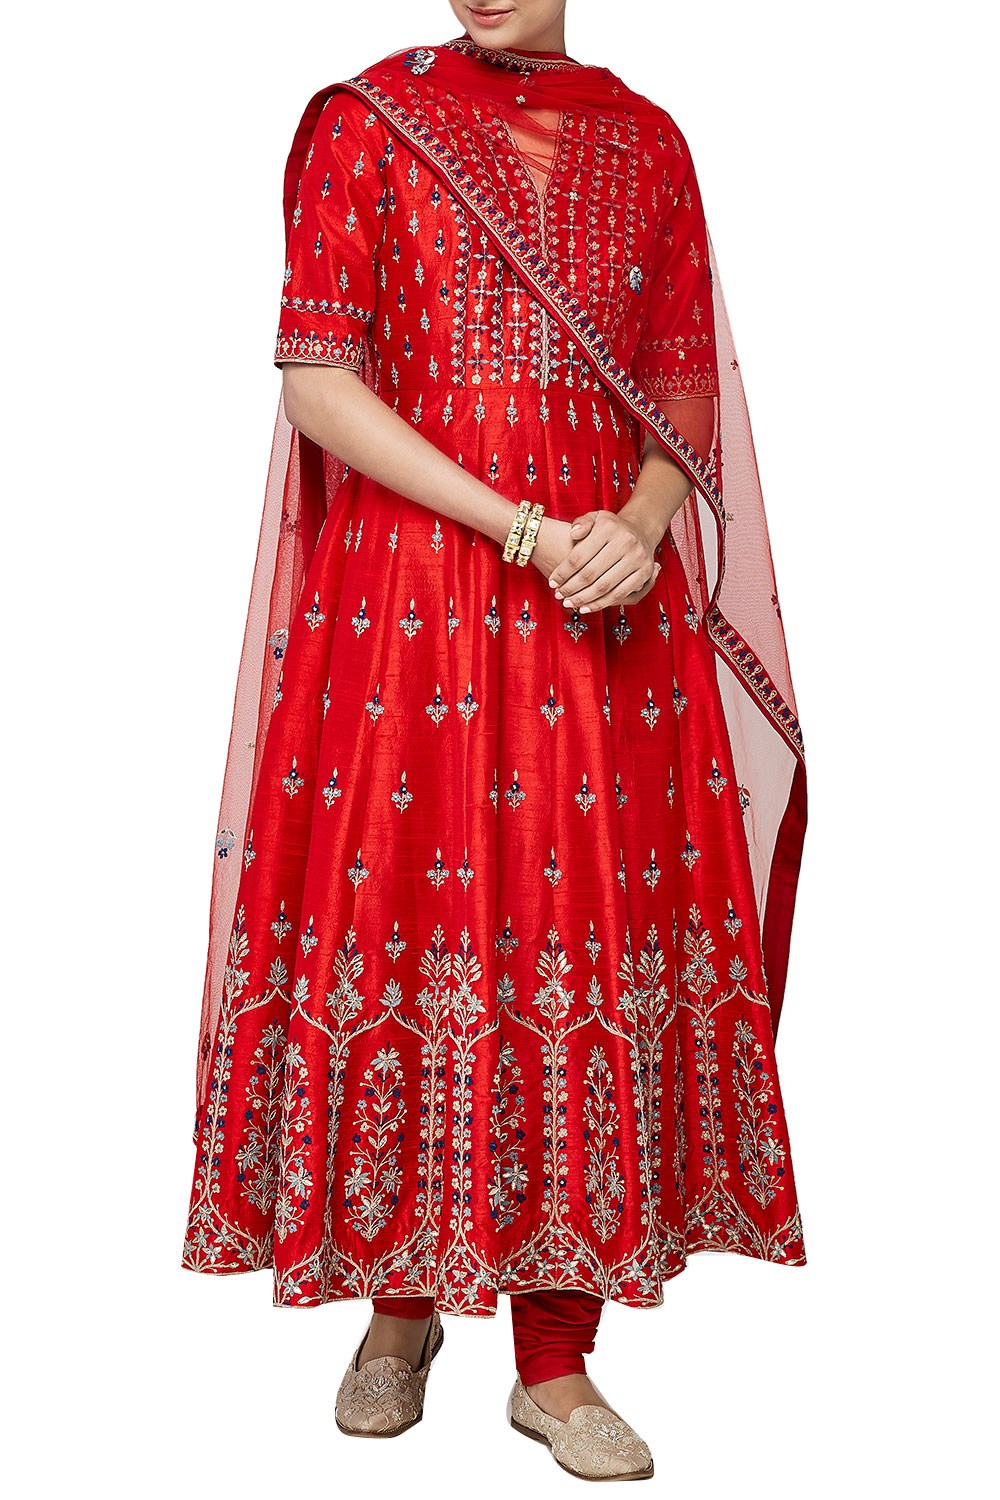 Red Color Anarkali in Dupion Silk